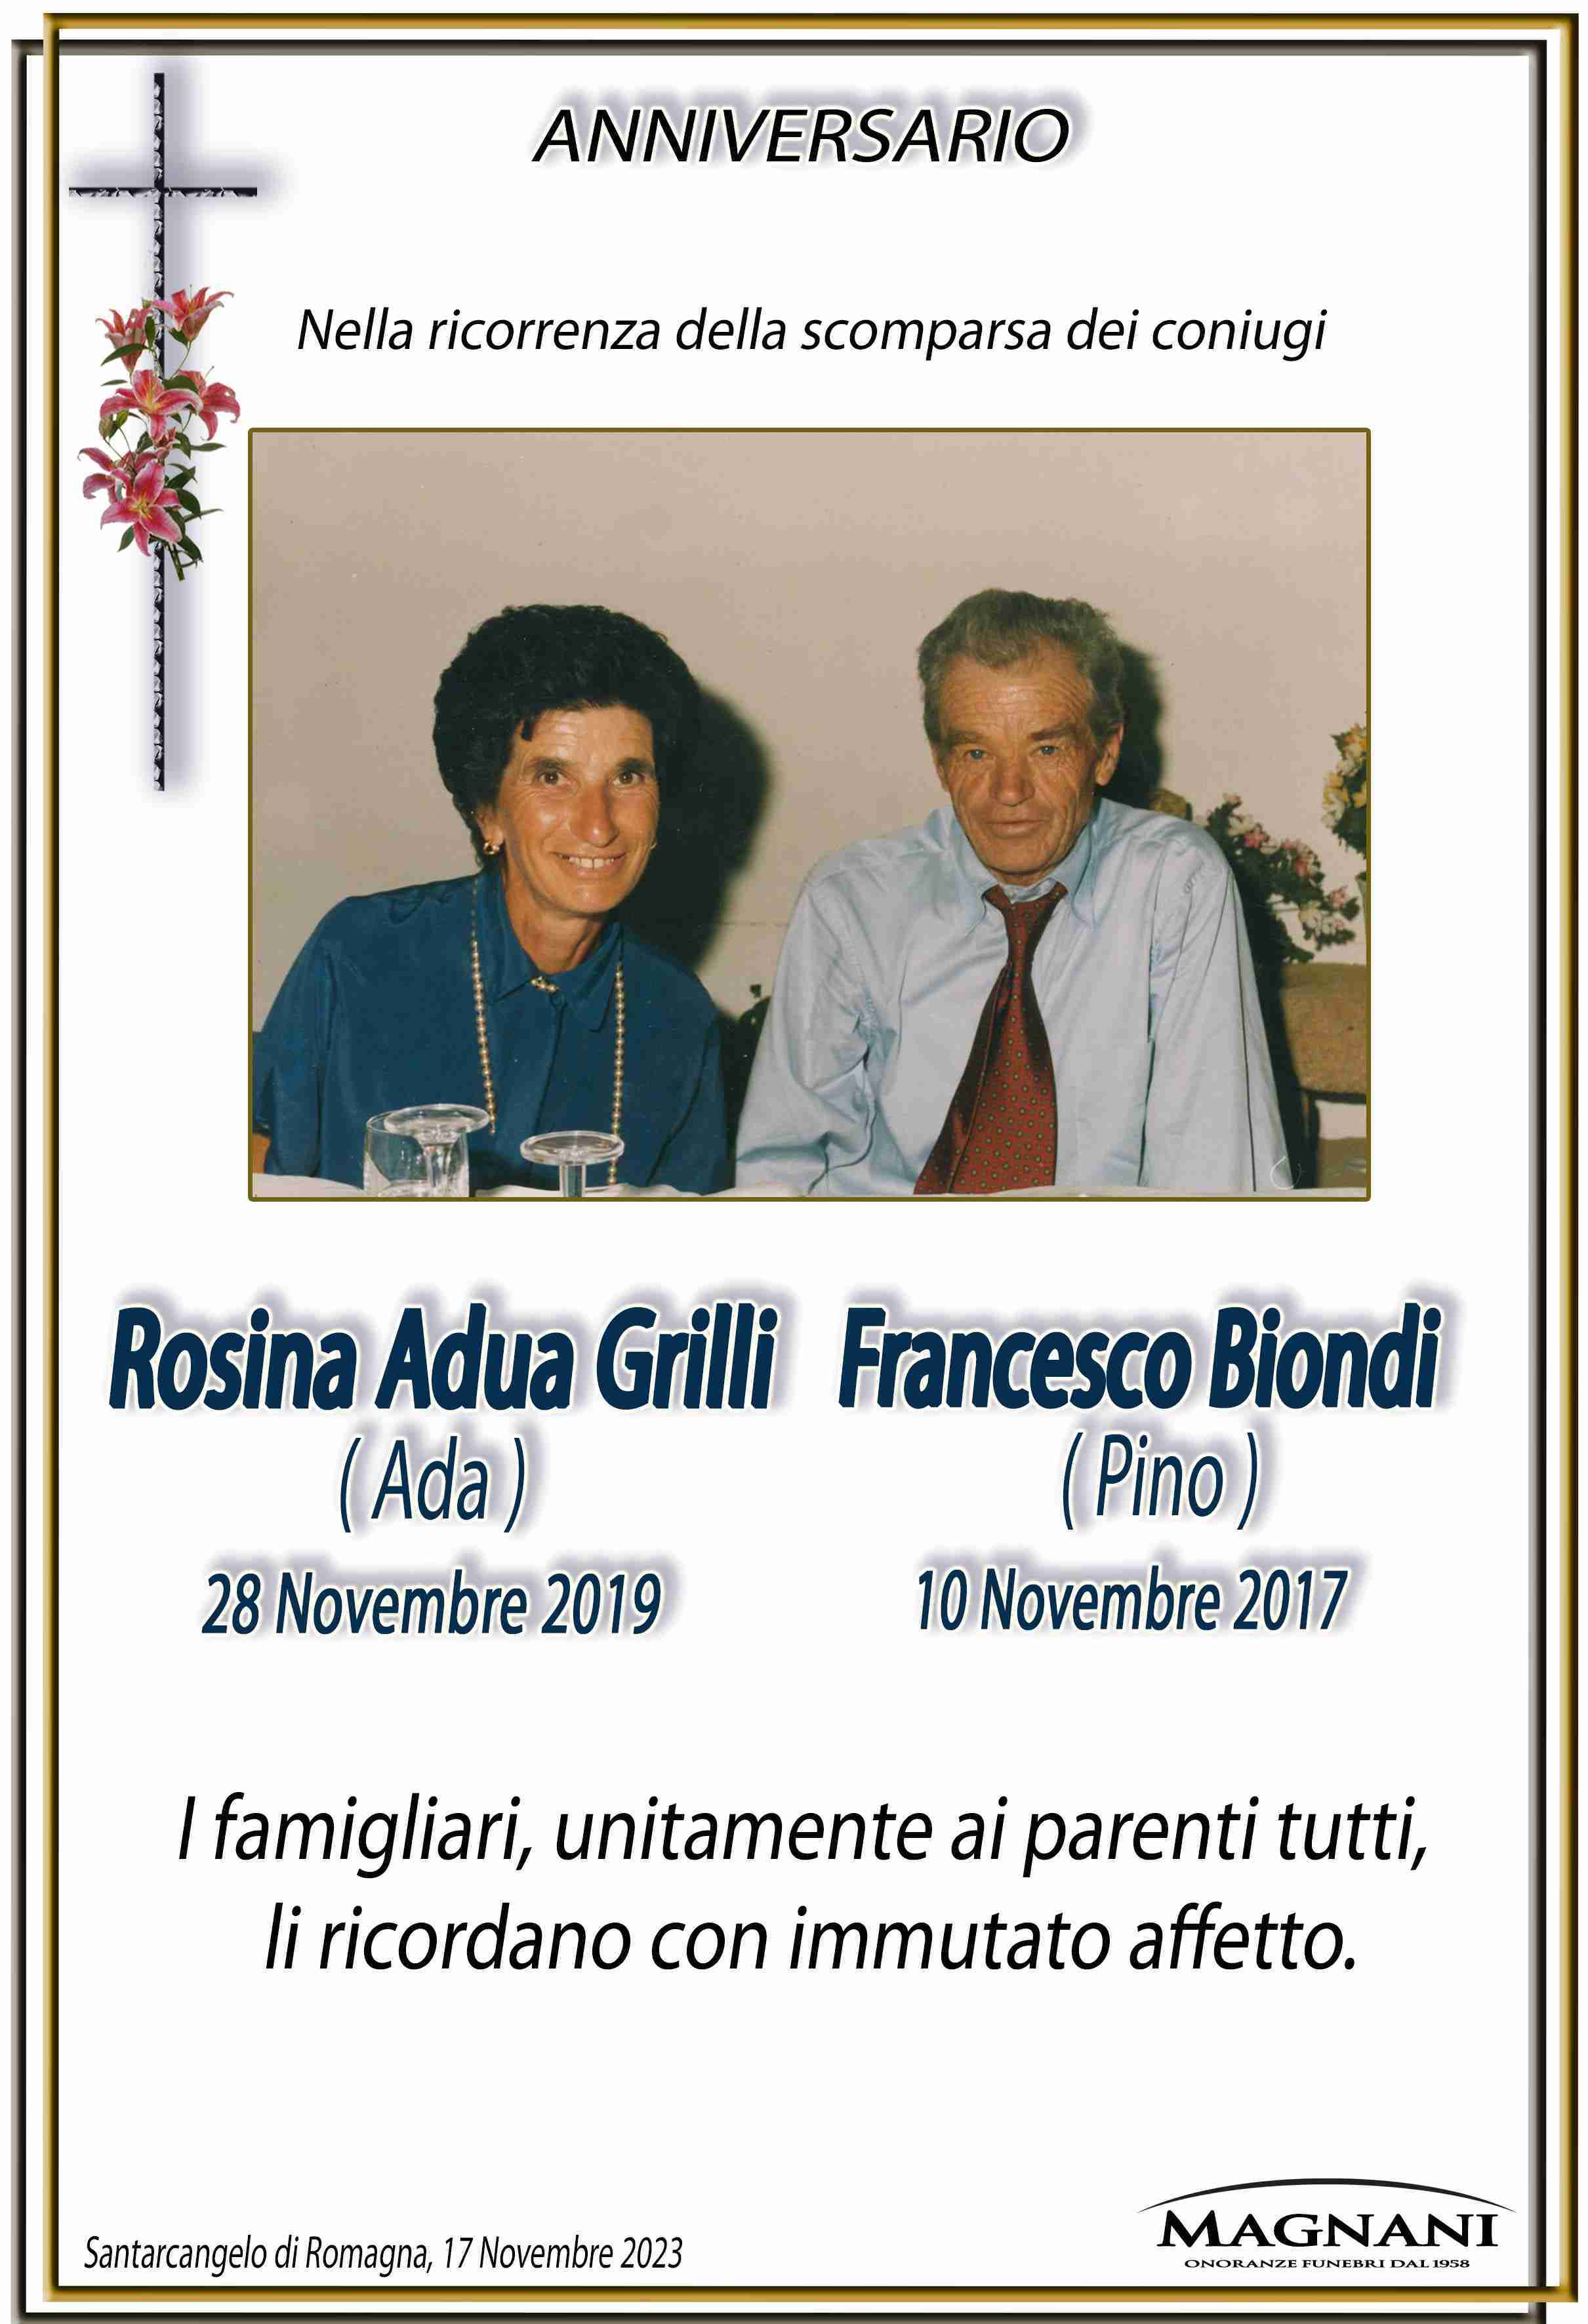 Rosina Adua Grilli e Francesco Biondi